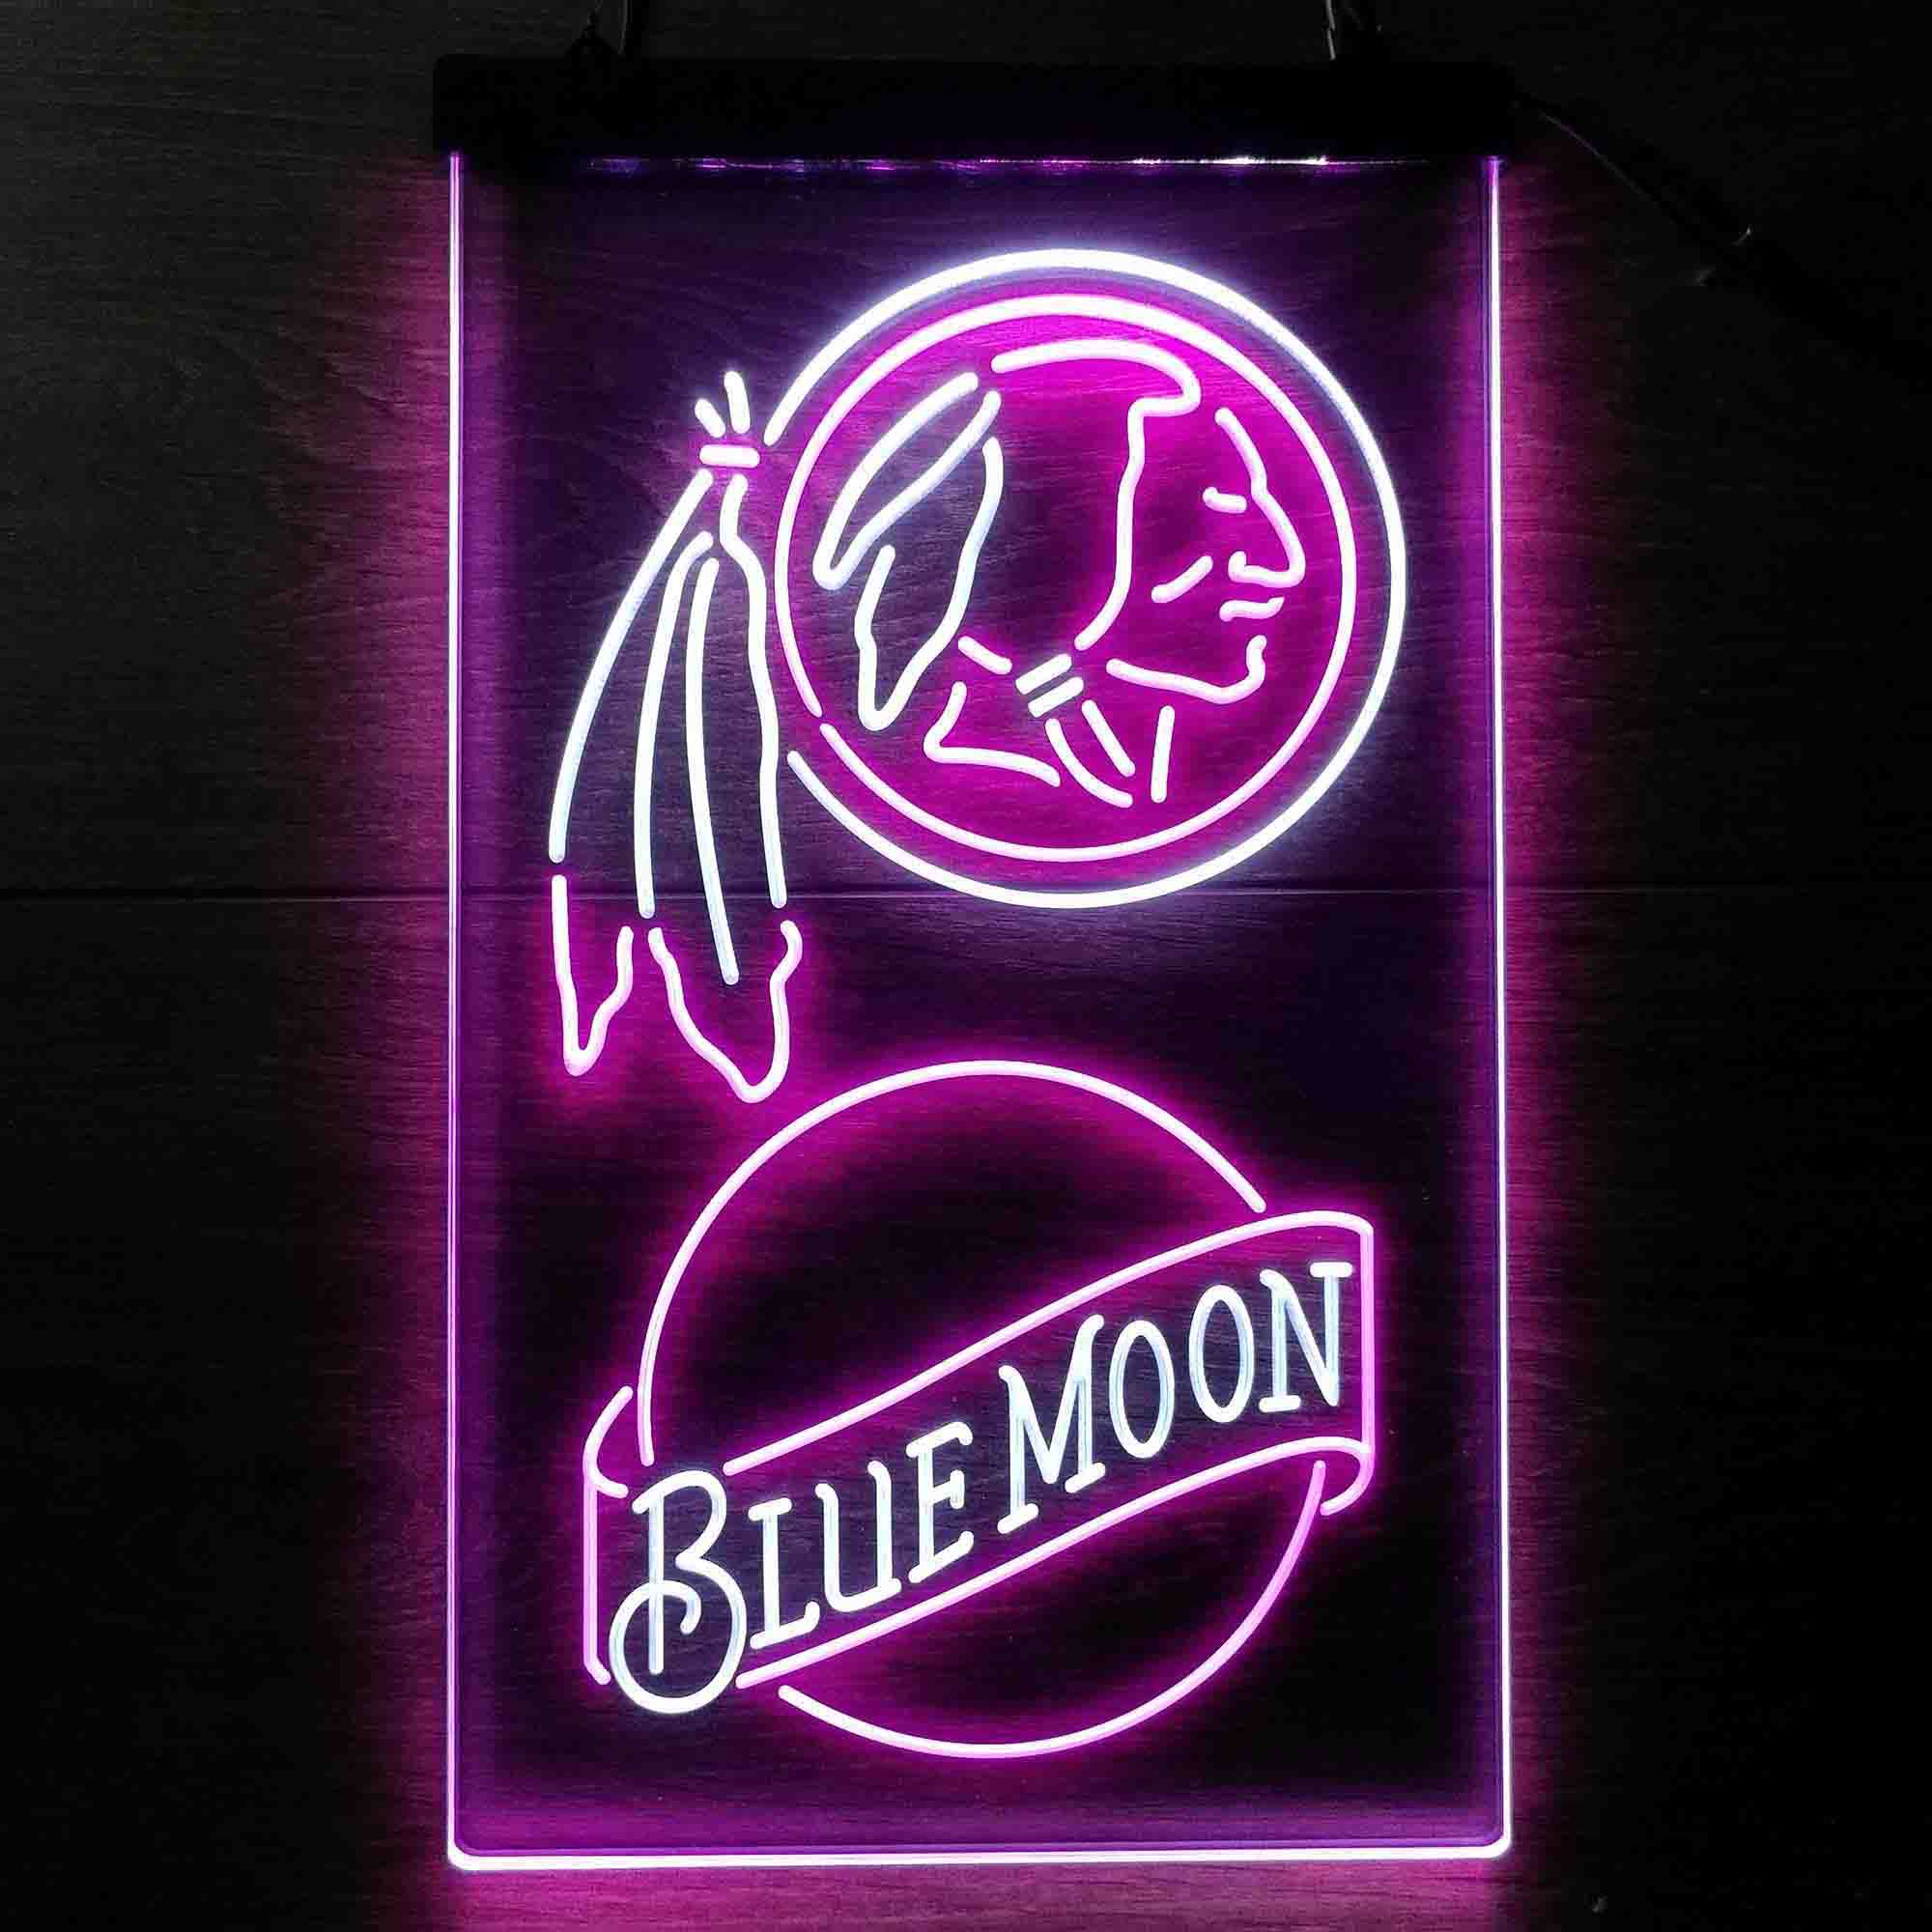 Washington Football Team Blue Moon Neon LED Sign